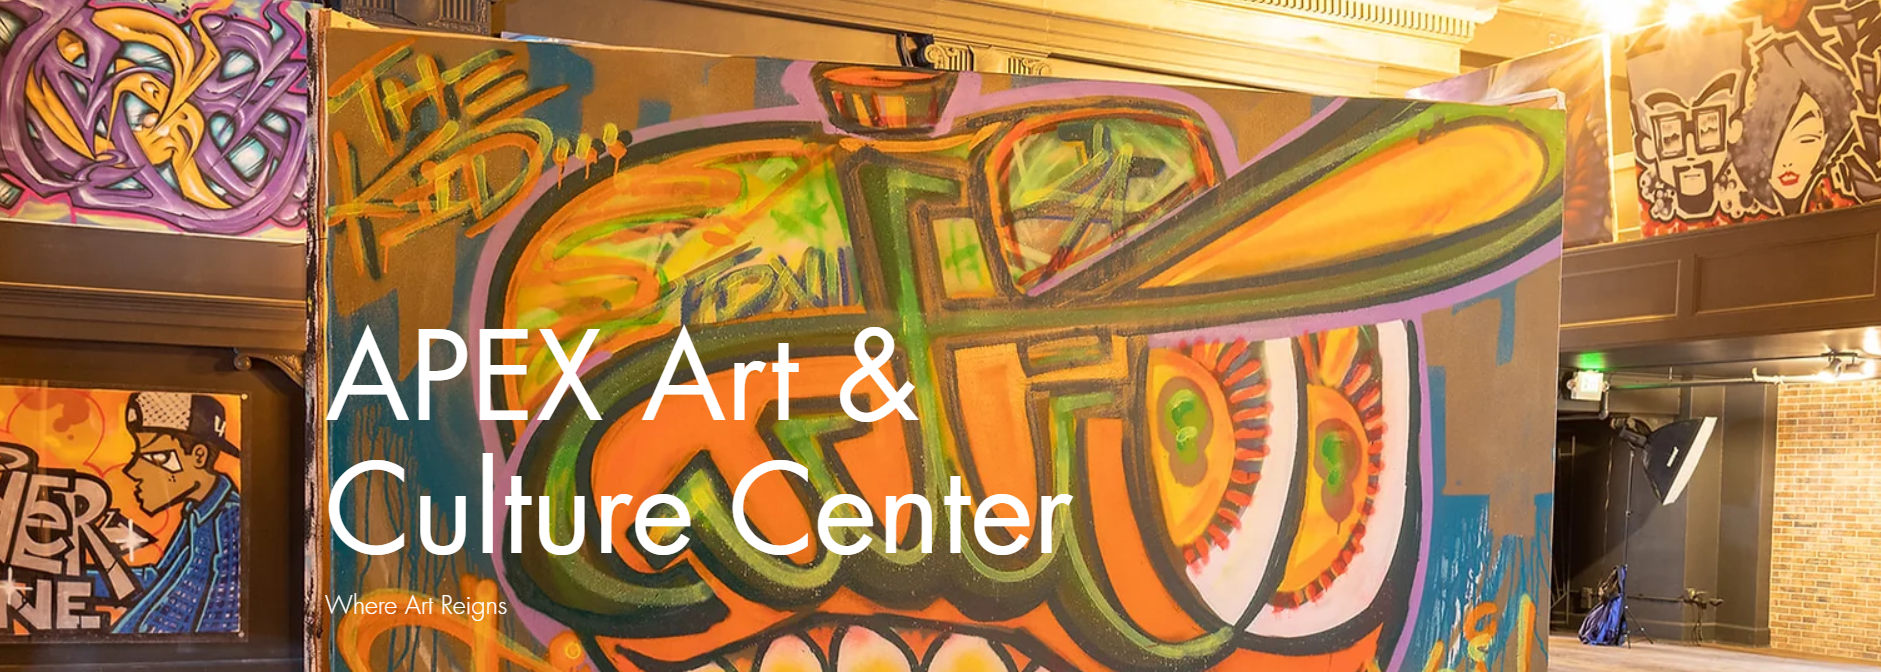 APEX Art & Culture Center's Image